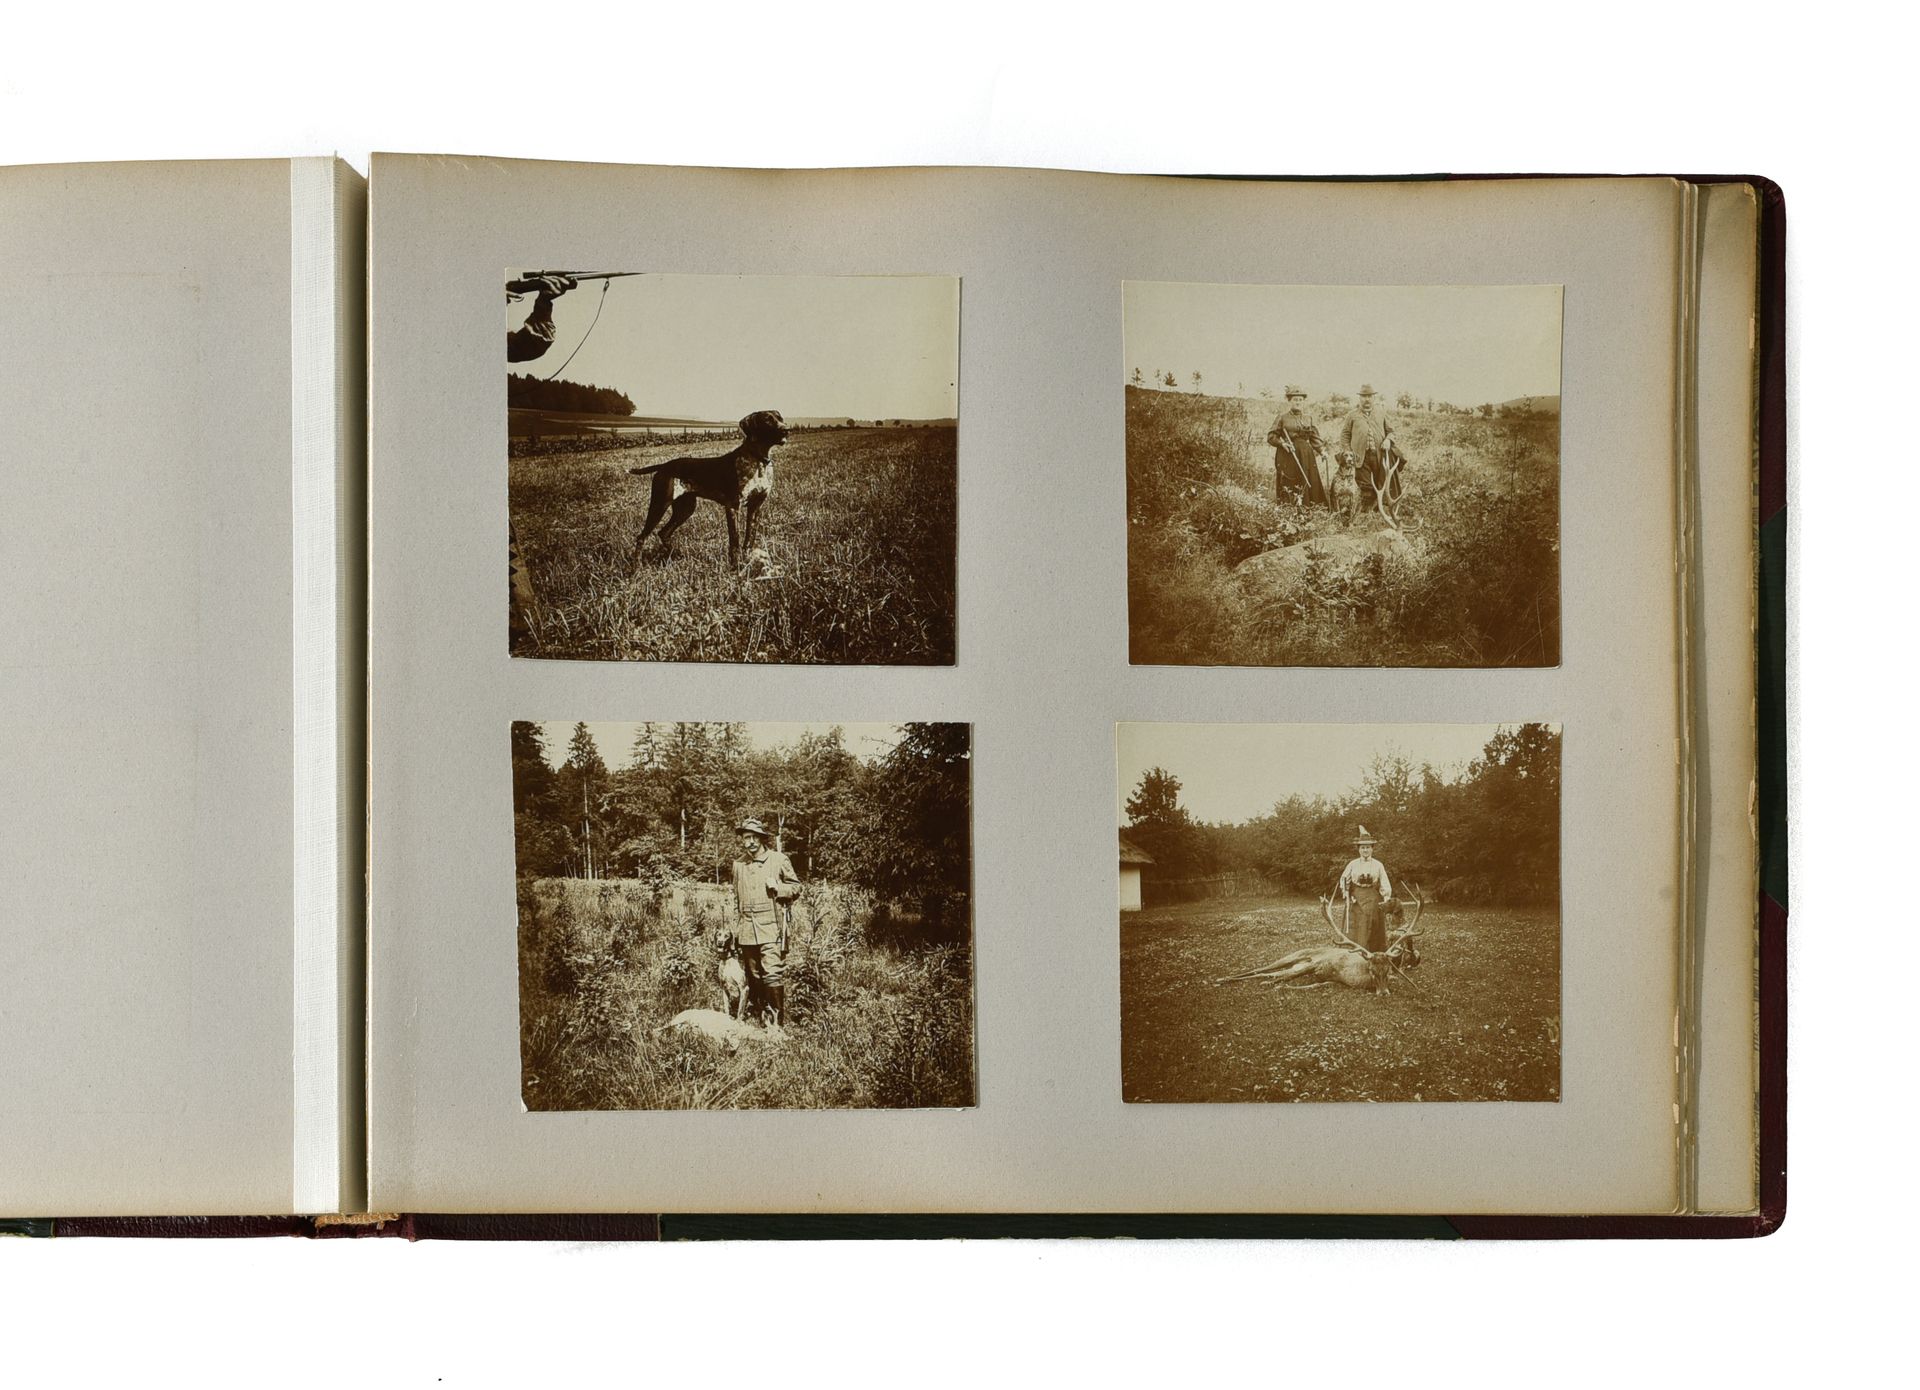 Album de photographies de chiens 比利时，约1900年

狗的照片专辑



意大利格式，包含88张黑白照片和一张狗的联系表，有&hellip;